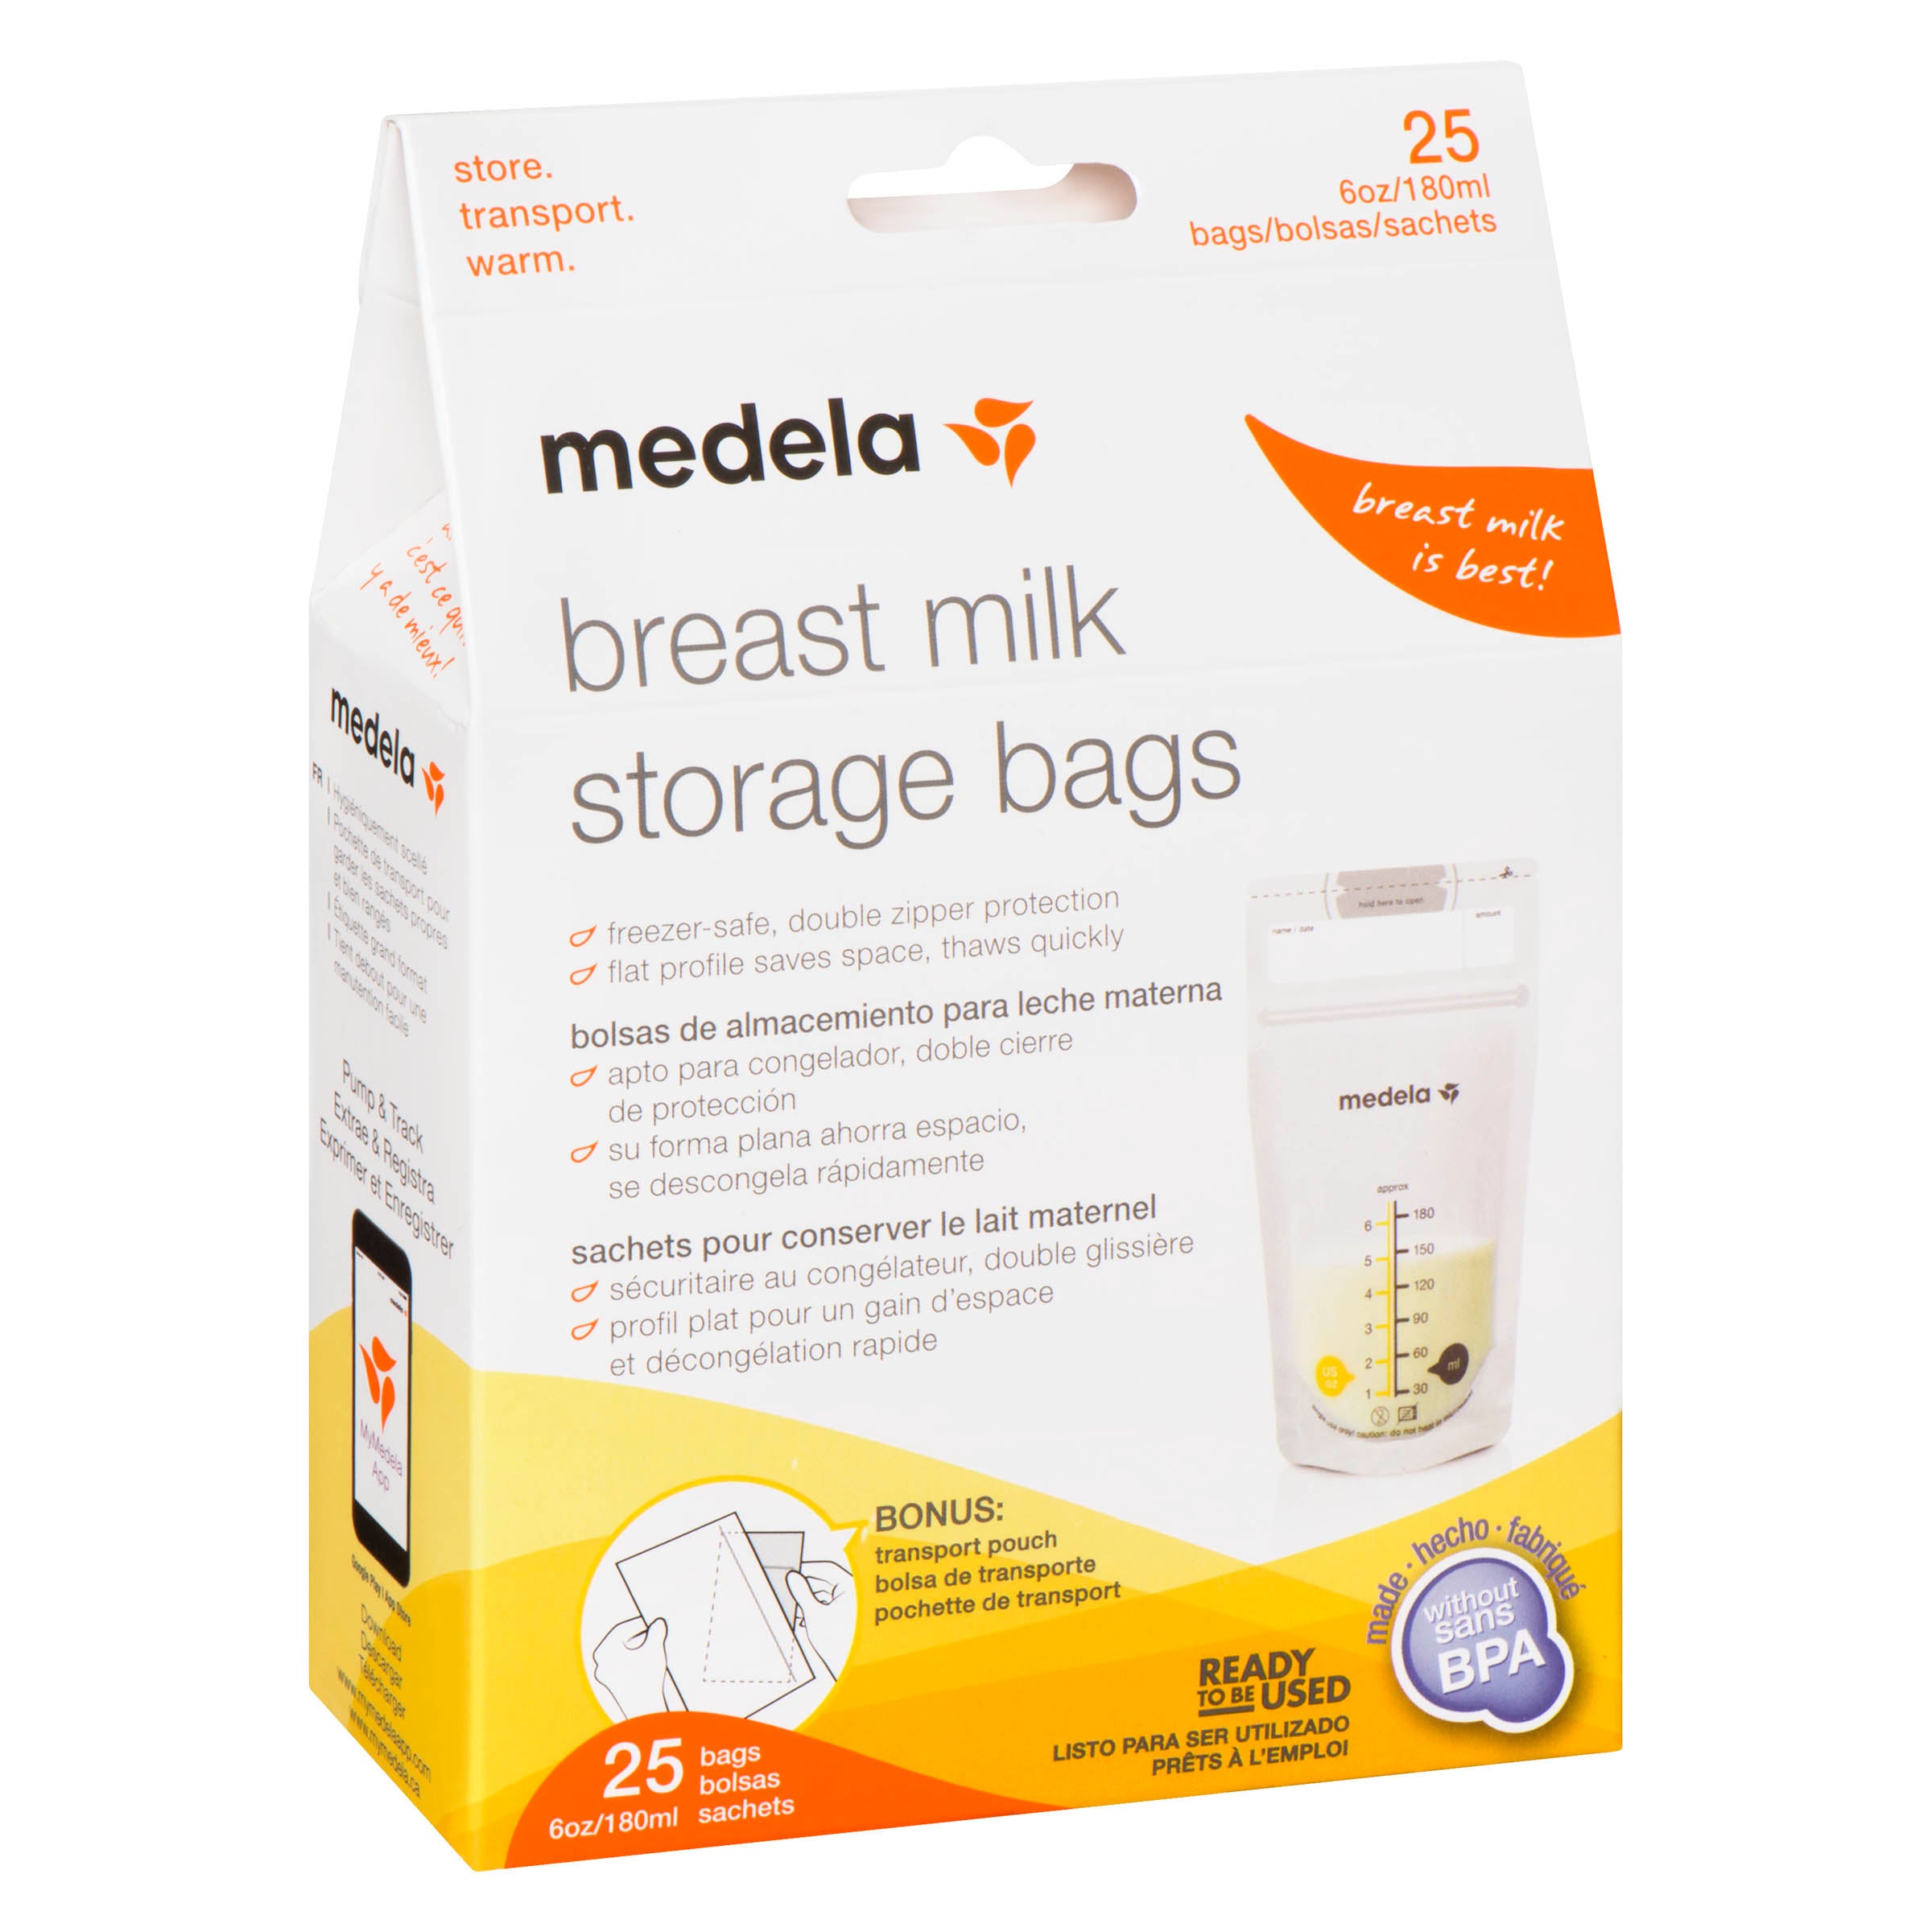 Medela Pump and Save Bags